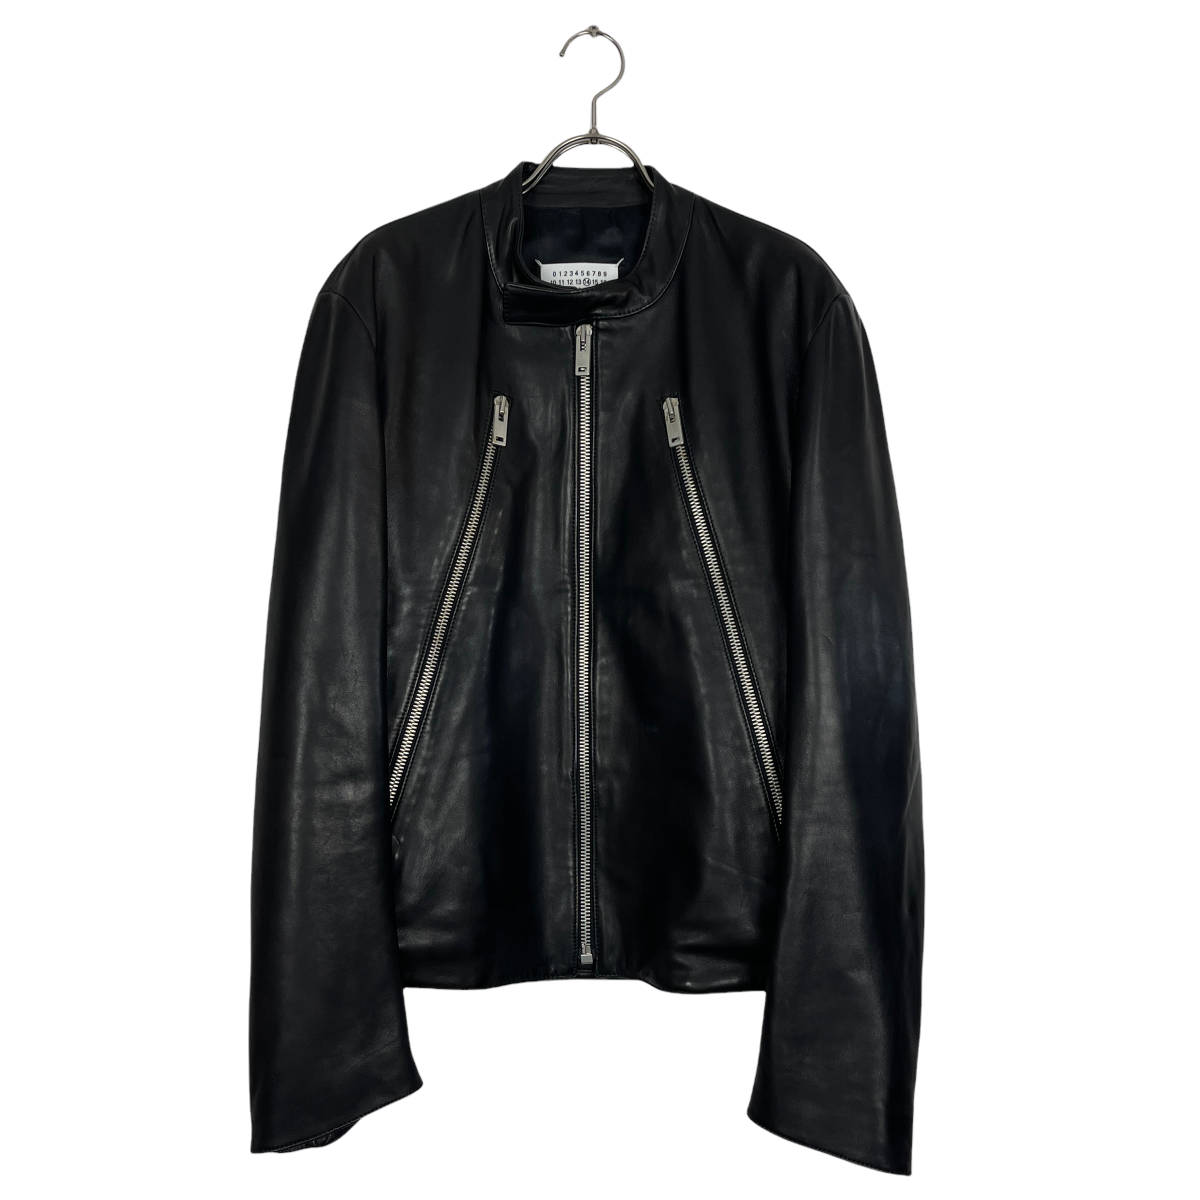 Maison Margiela(メゾン マルジェラ) 八の字 leather jacket (black)_画像1